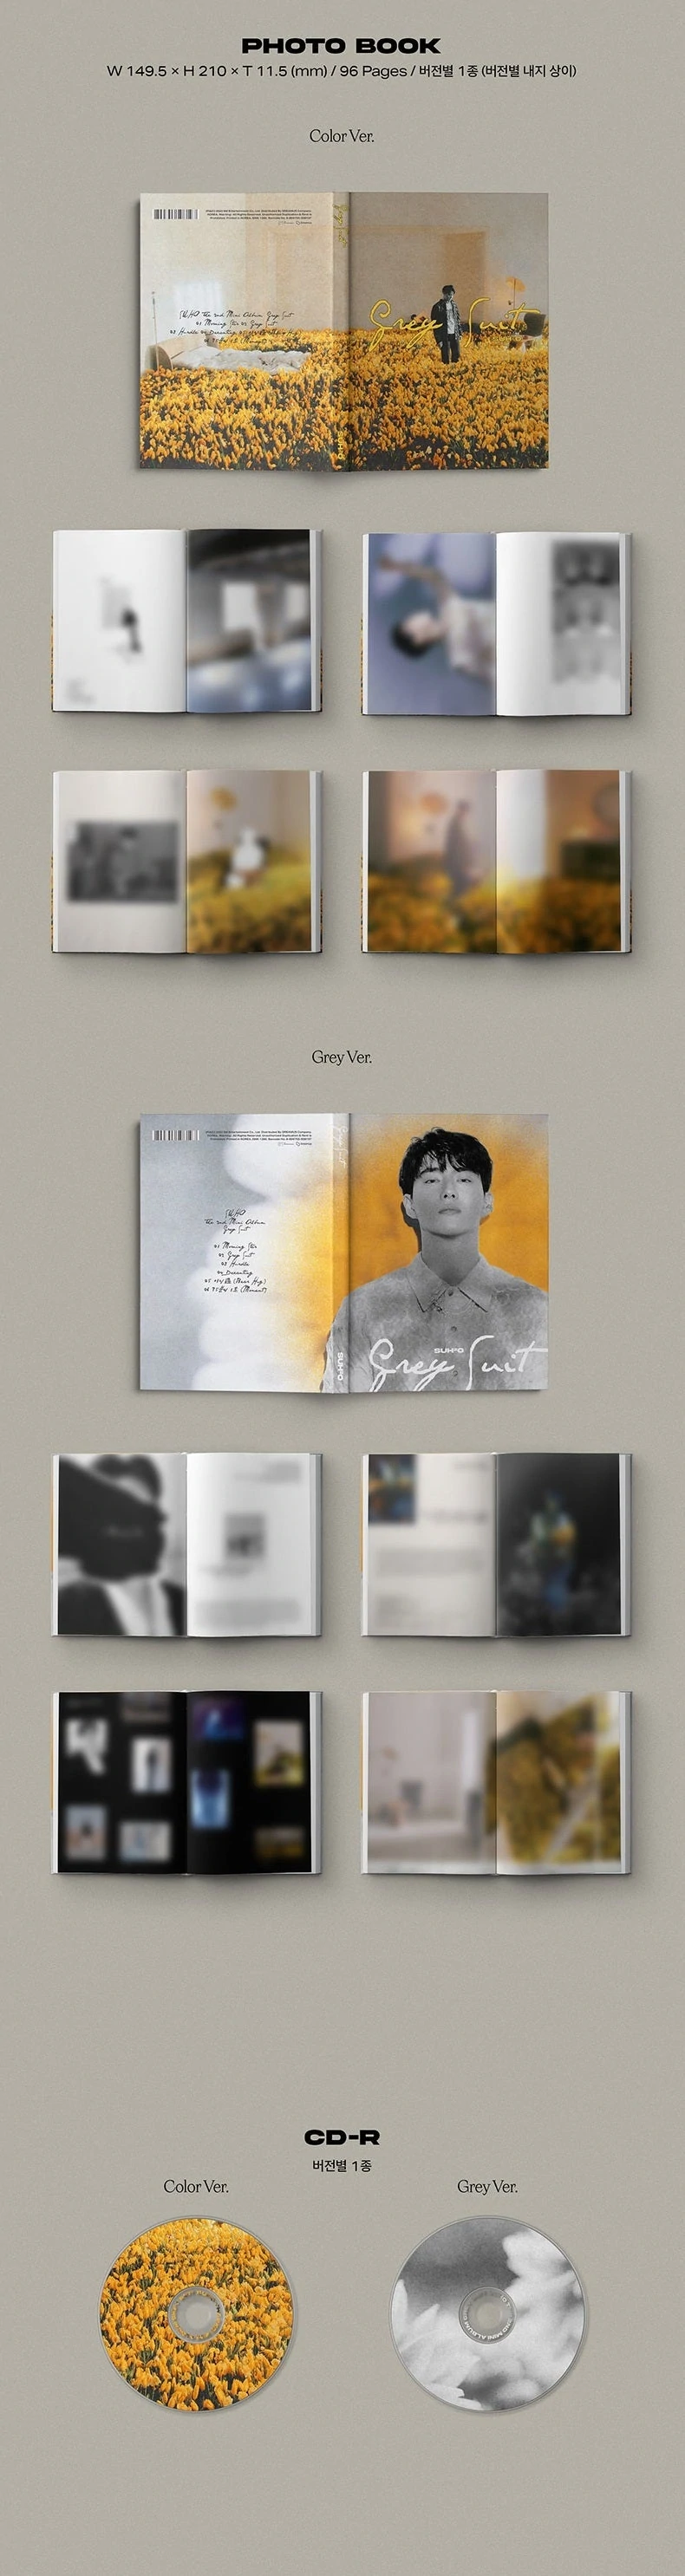 EXO: Suho Mini Album Vol. 2 - Grey Suit (Photobook Version)